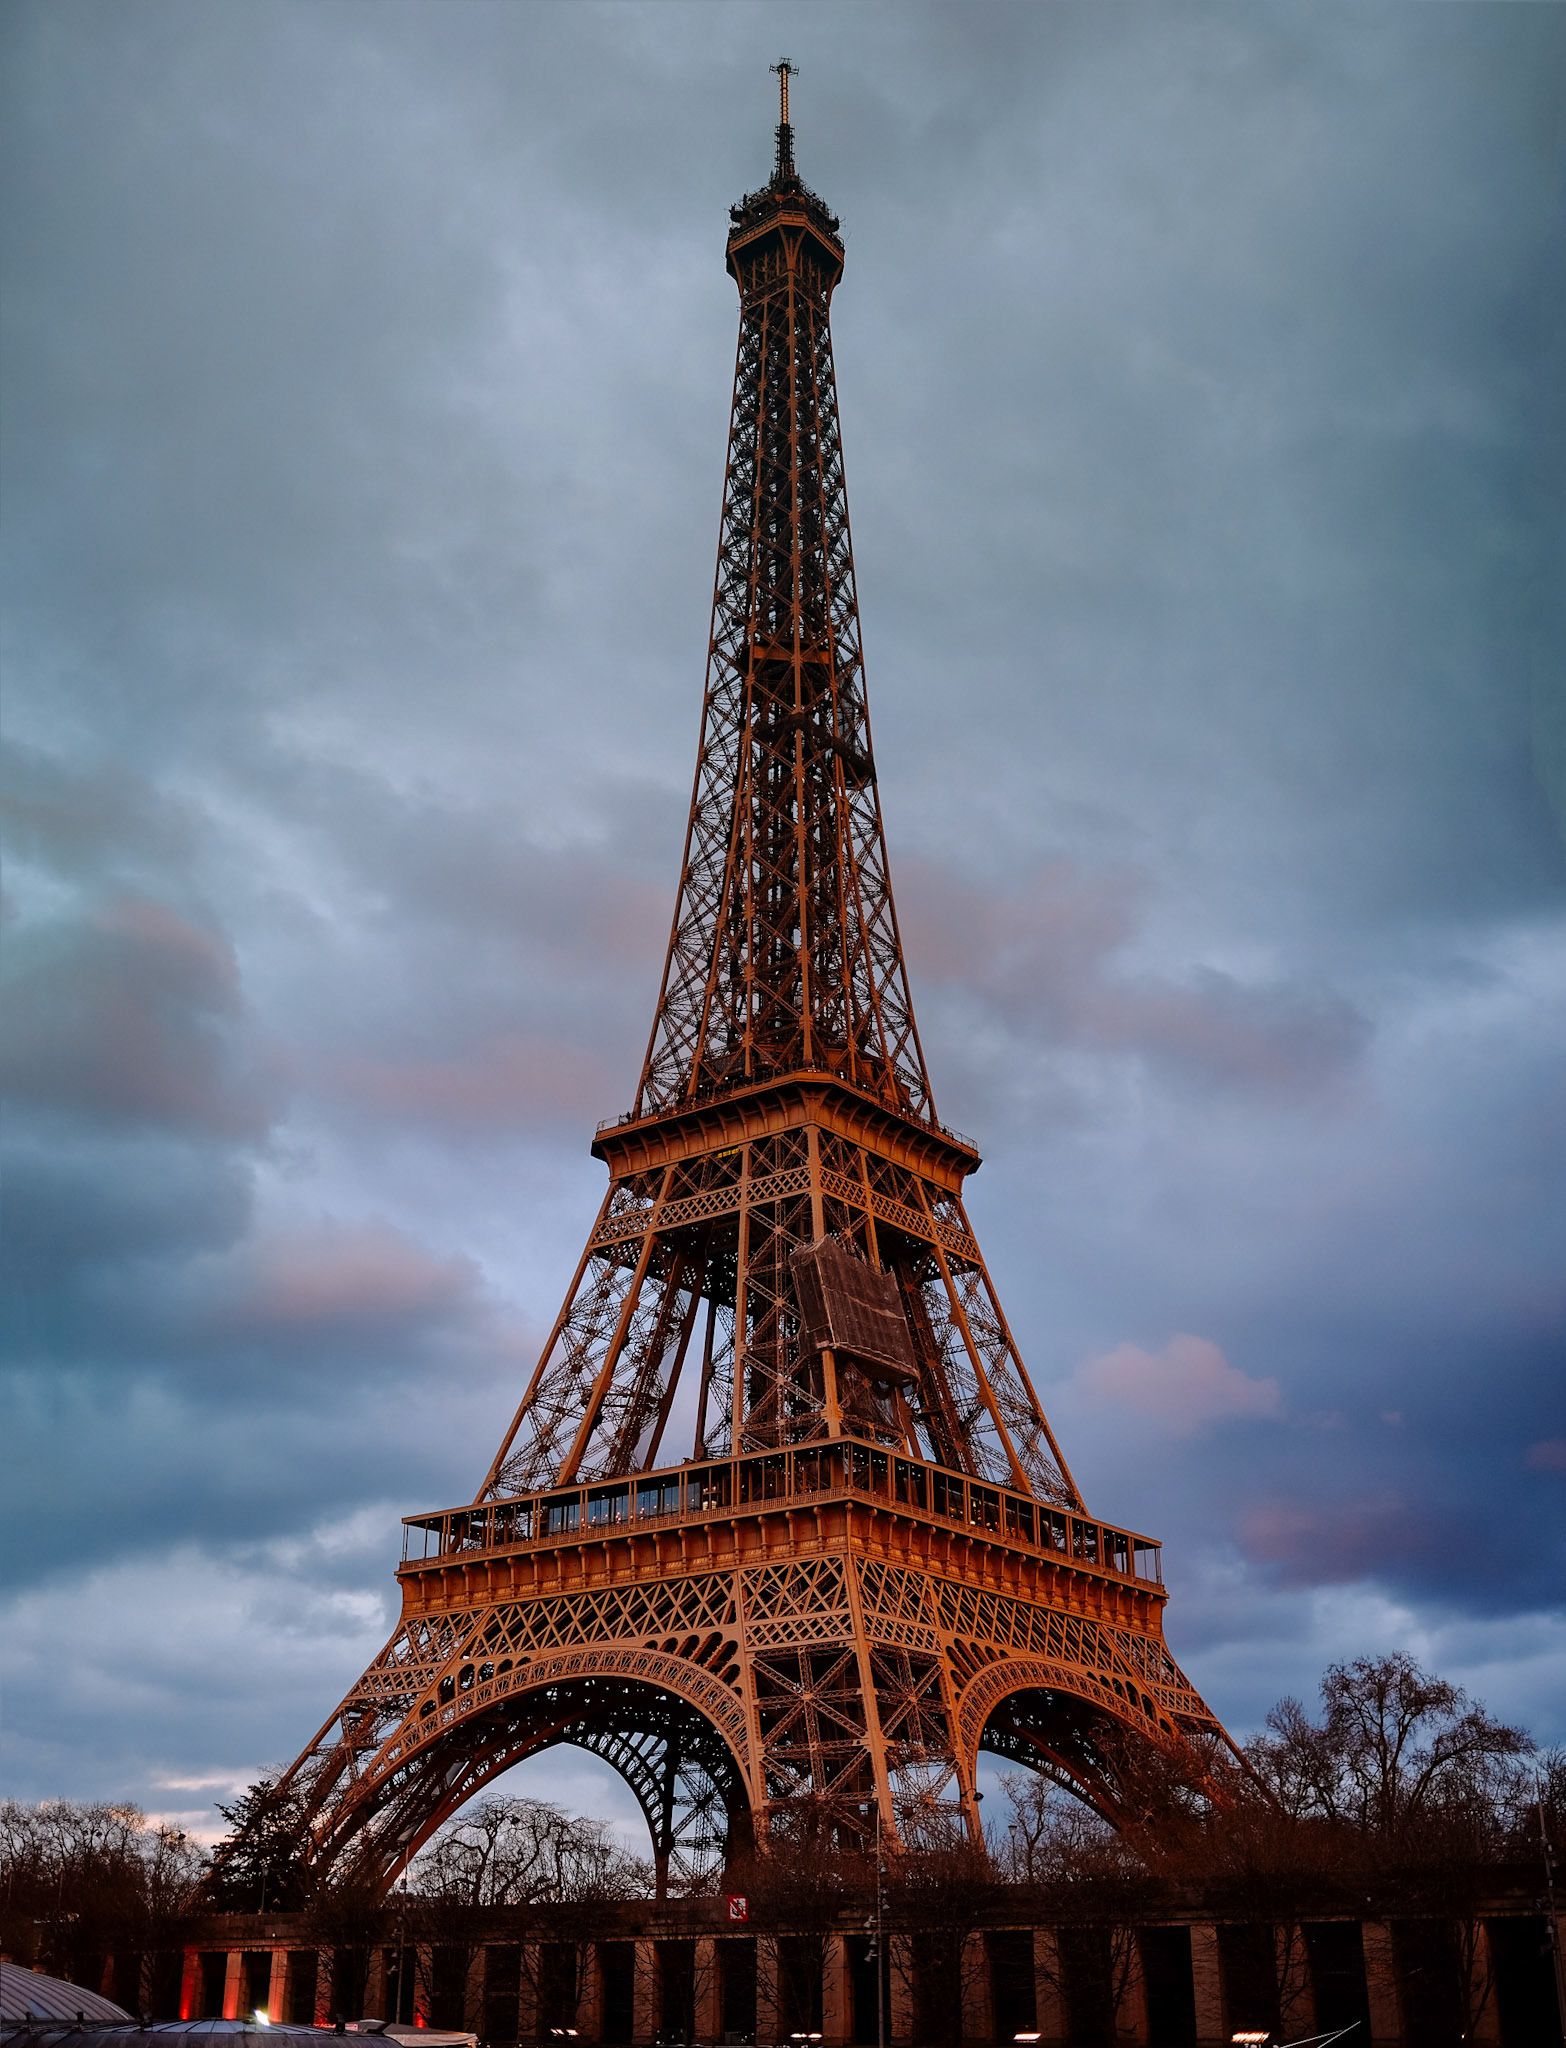 Sunset on the Eiffel Tower